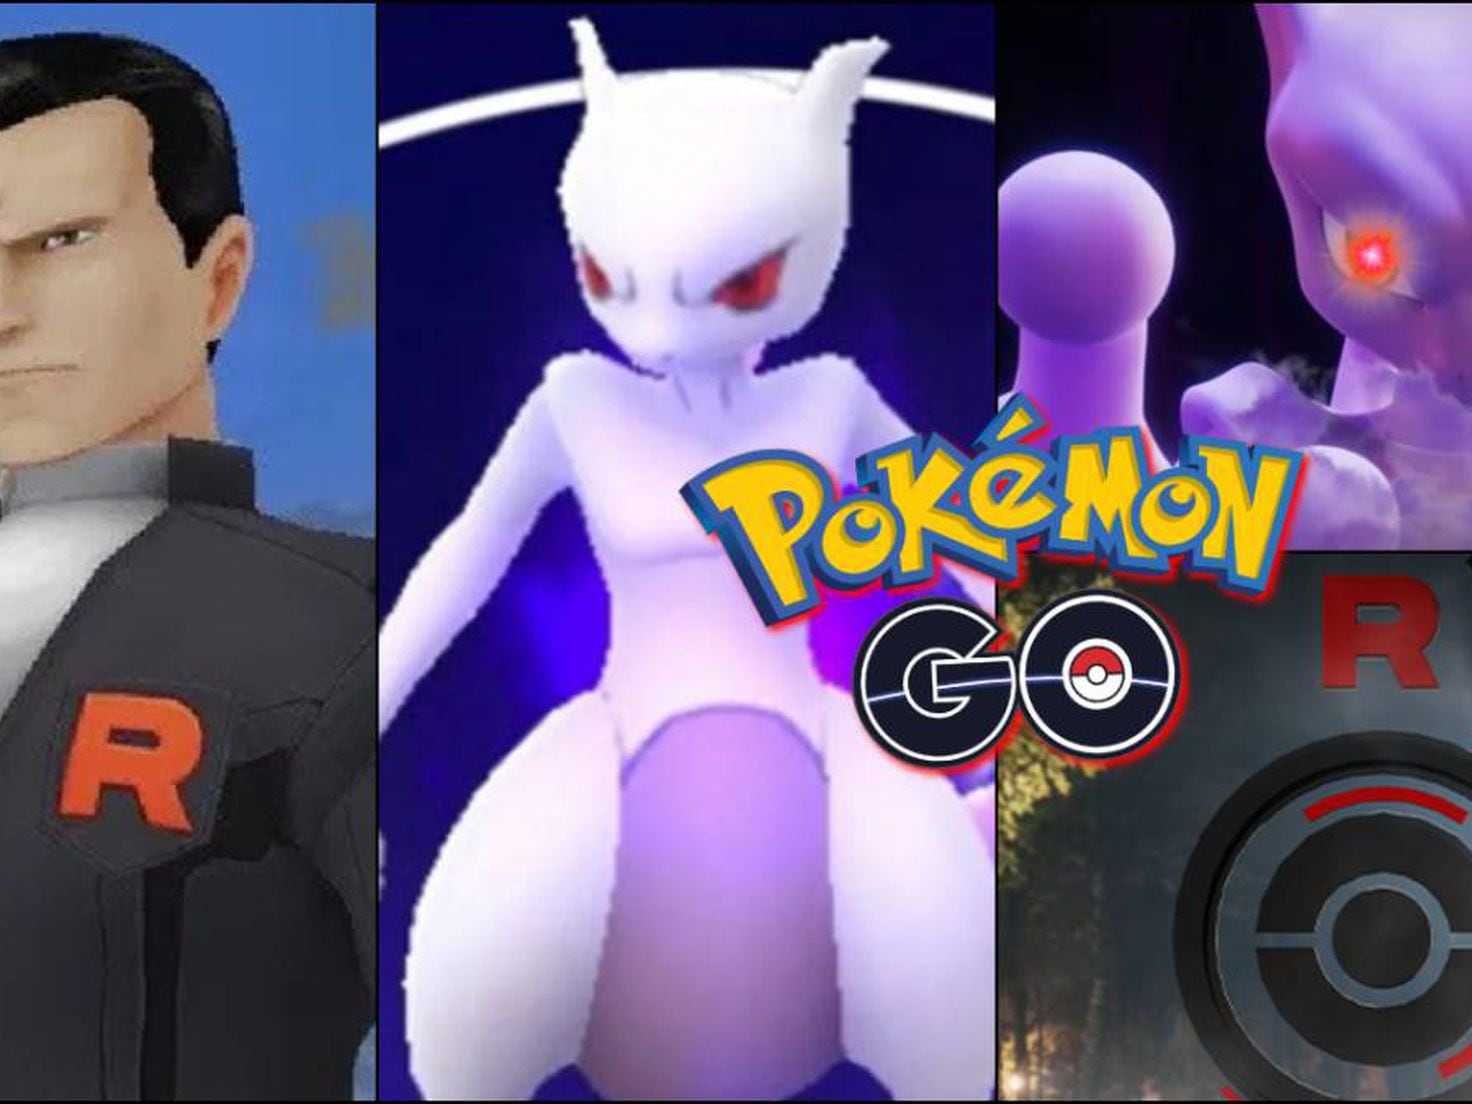 Pokémon GO Fest 2020 día 2: mewtwo oscuro y victini recompensas en